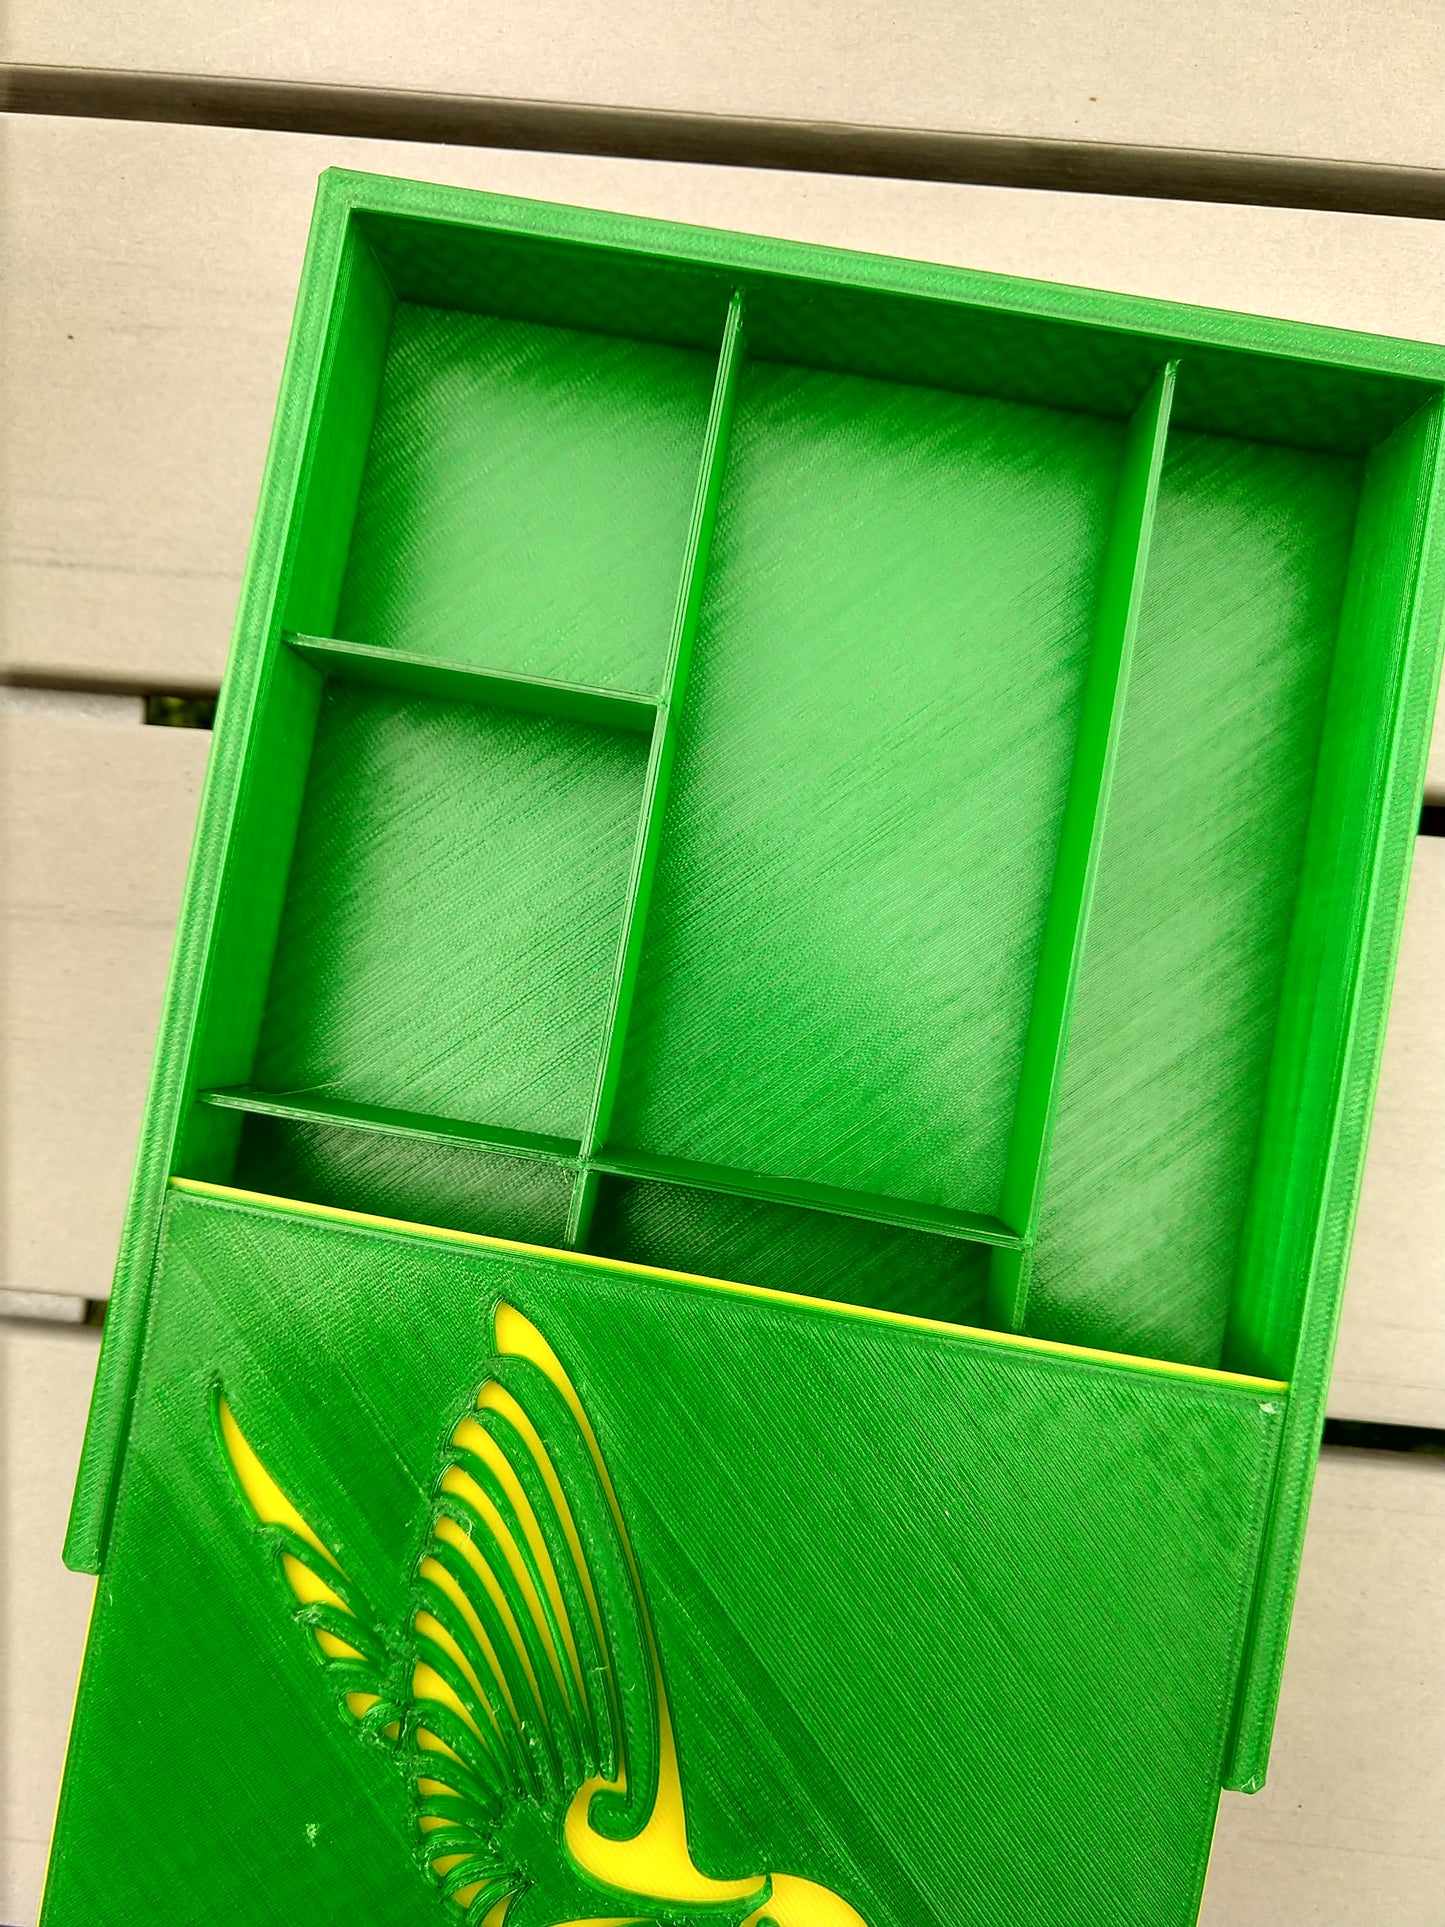 3D printed Notions Box